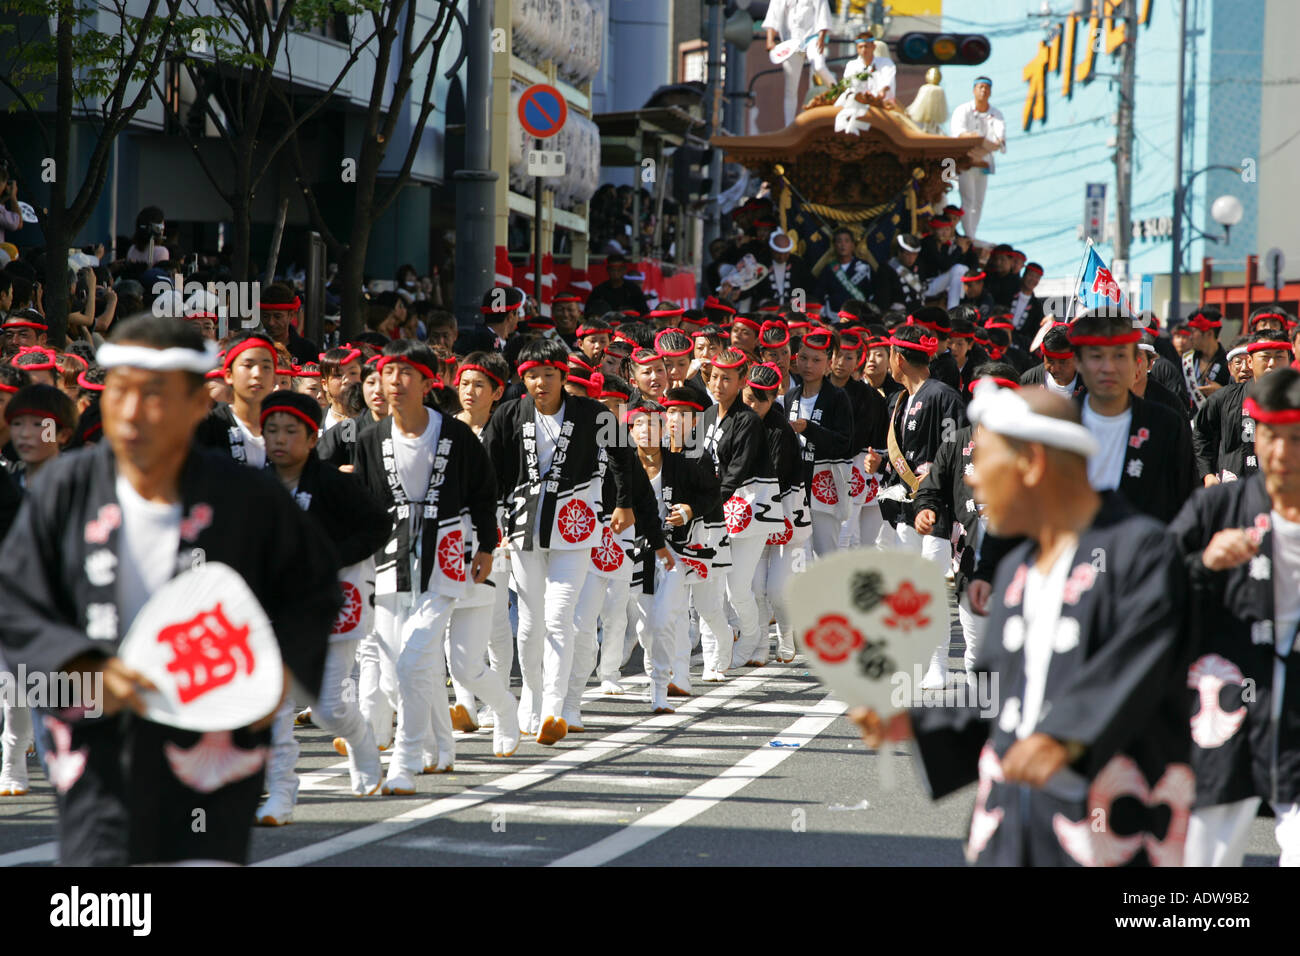 Festival action from the anual Kishiwada danjiri festival in south Osaka Kansai region Japan Asia Stock Photo